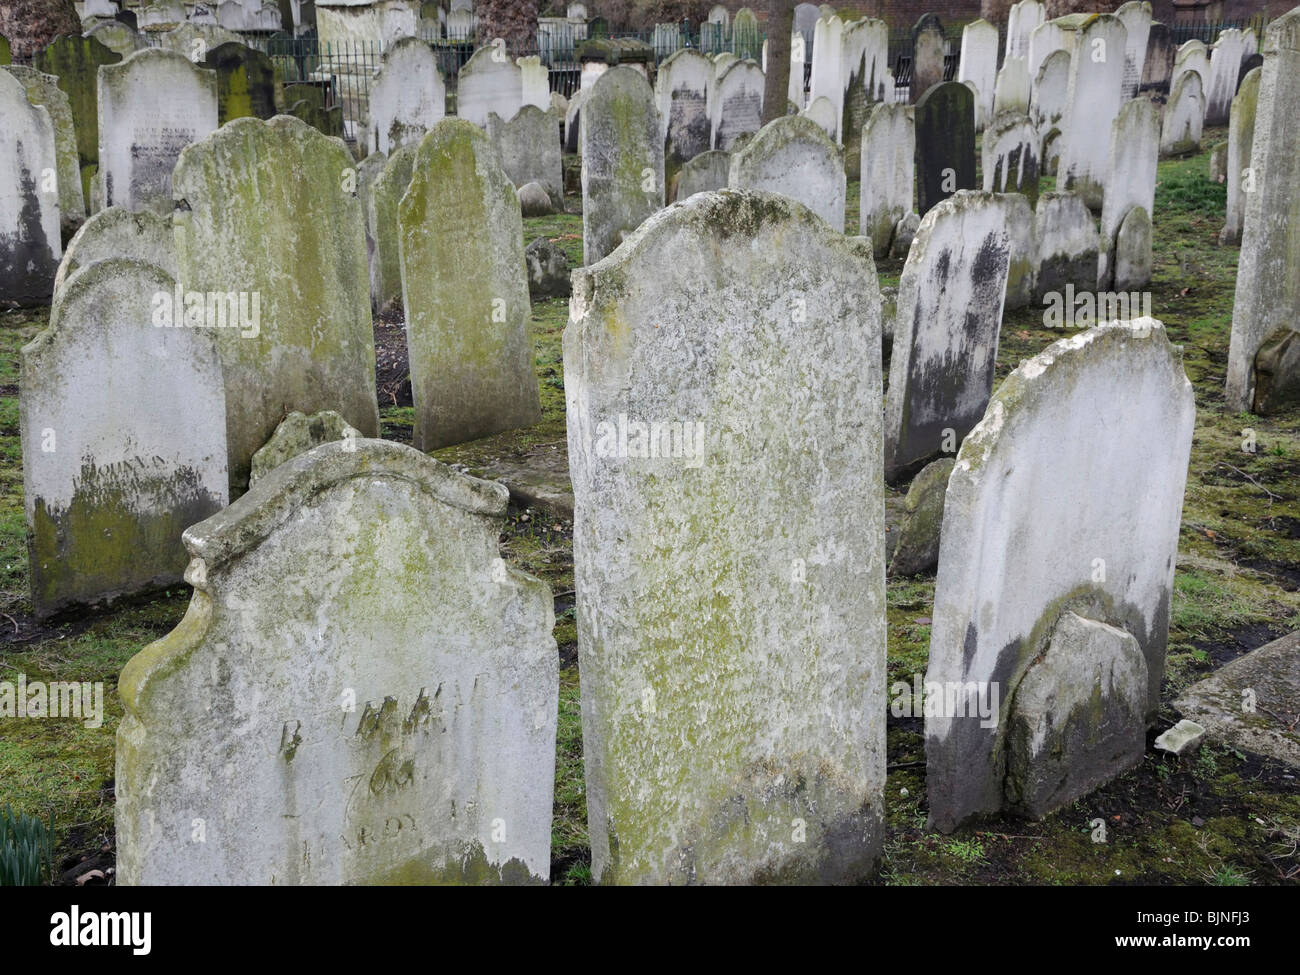 Gravestones in Bunhill Fields, City Road, London, England, UK. Stock Photo